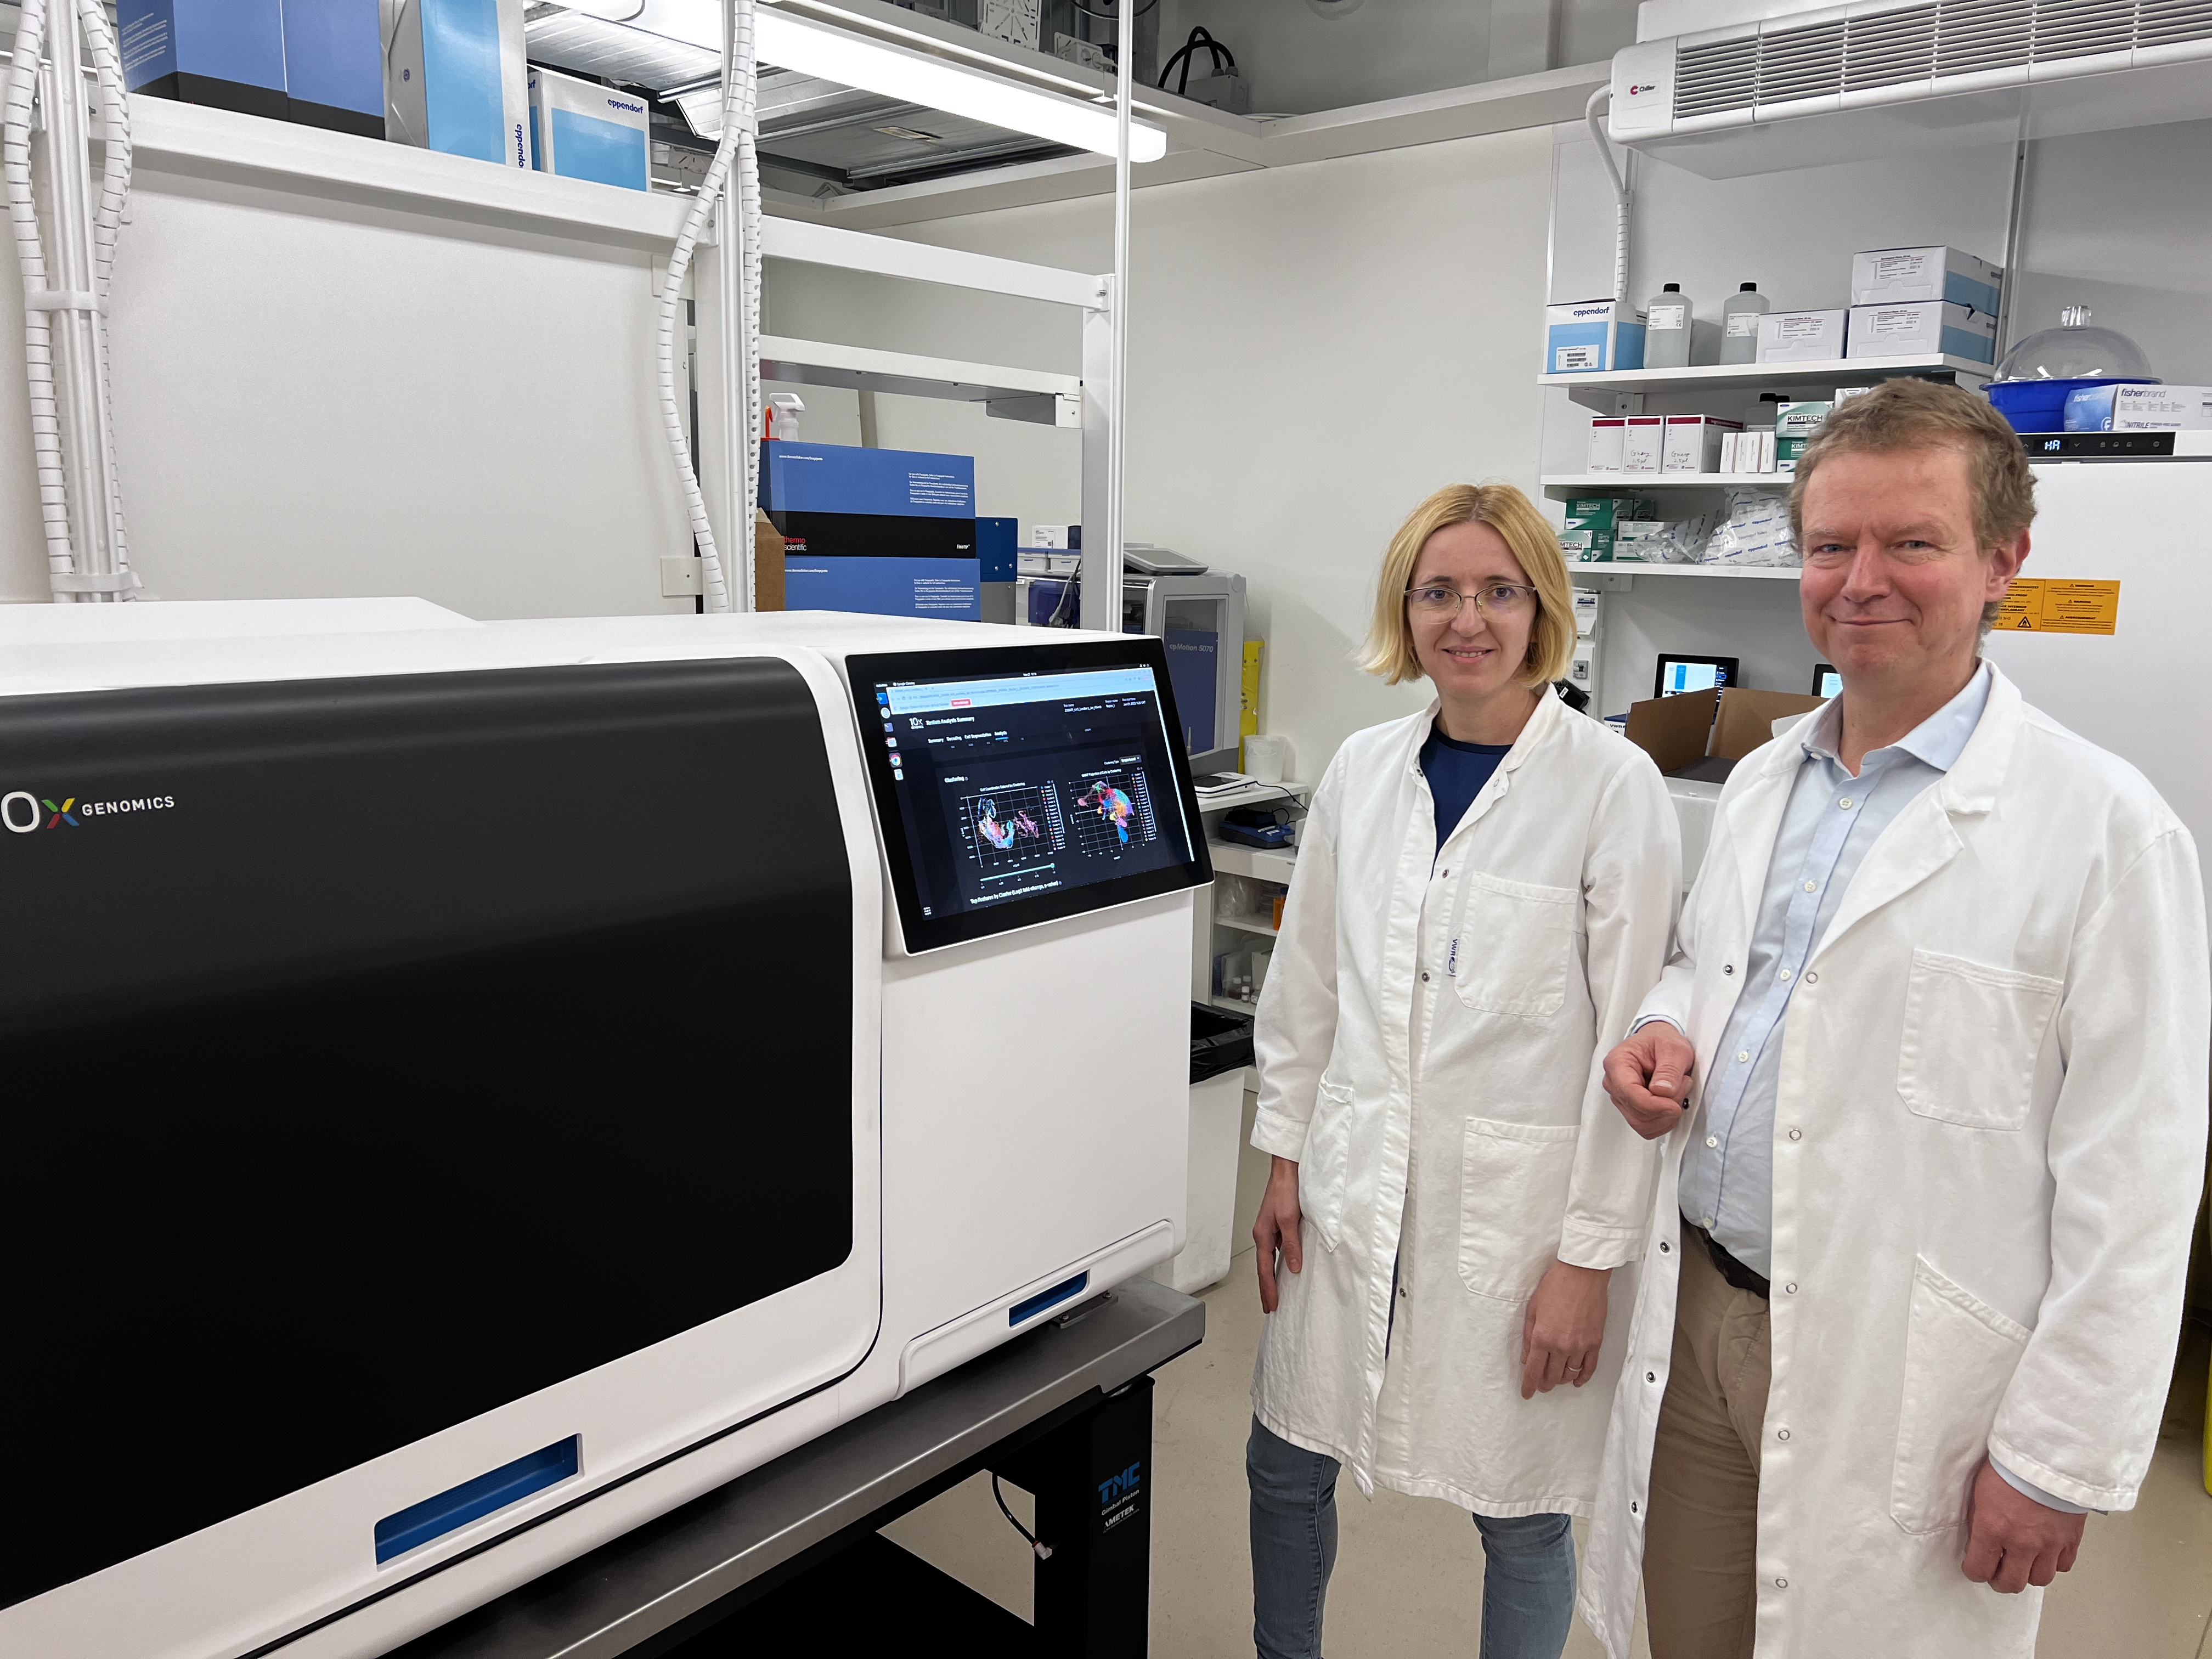 Mats Nilsson, PhD (right) and Katarina Tiklova, PhD (left) standing with the Xenium Analyzer.